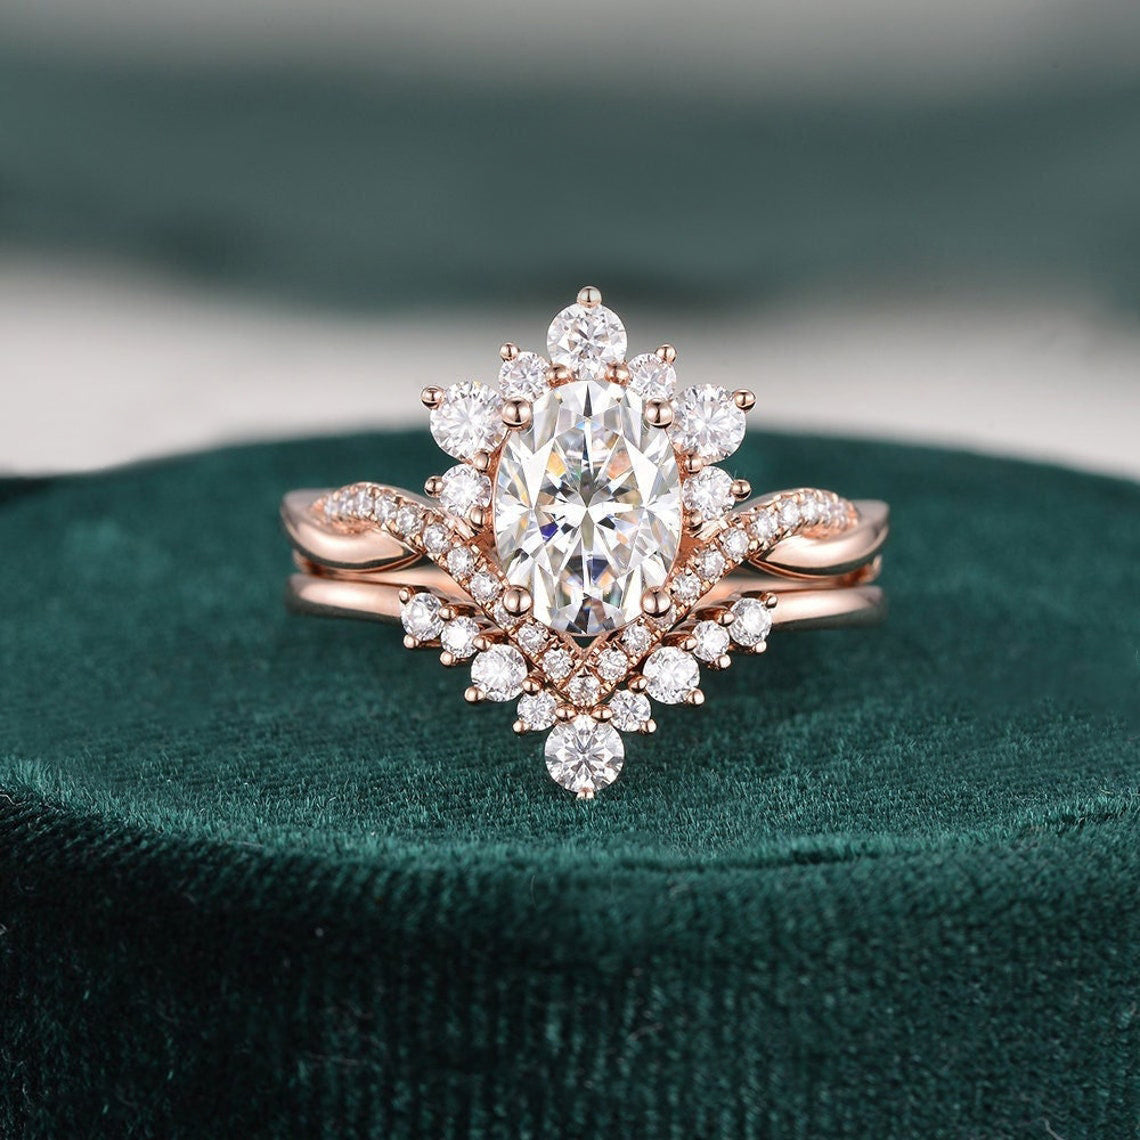 Jewelry Designer 1216-953 Sticky Gems Metstuds Valpk 7Mm, Assorted